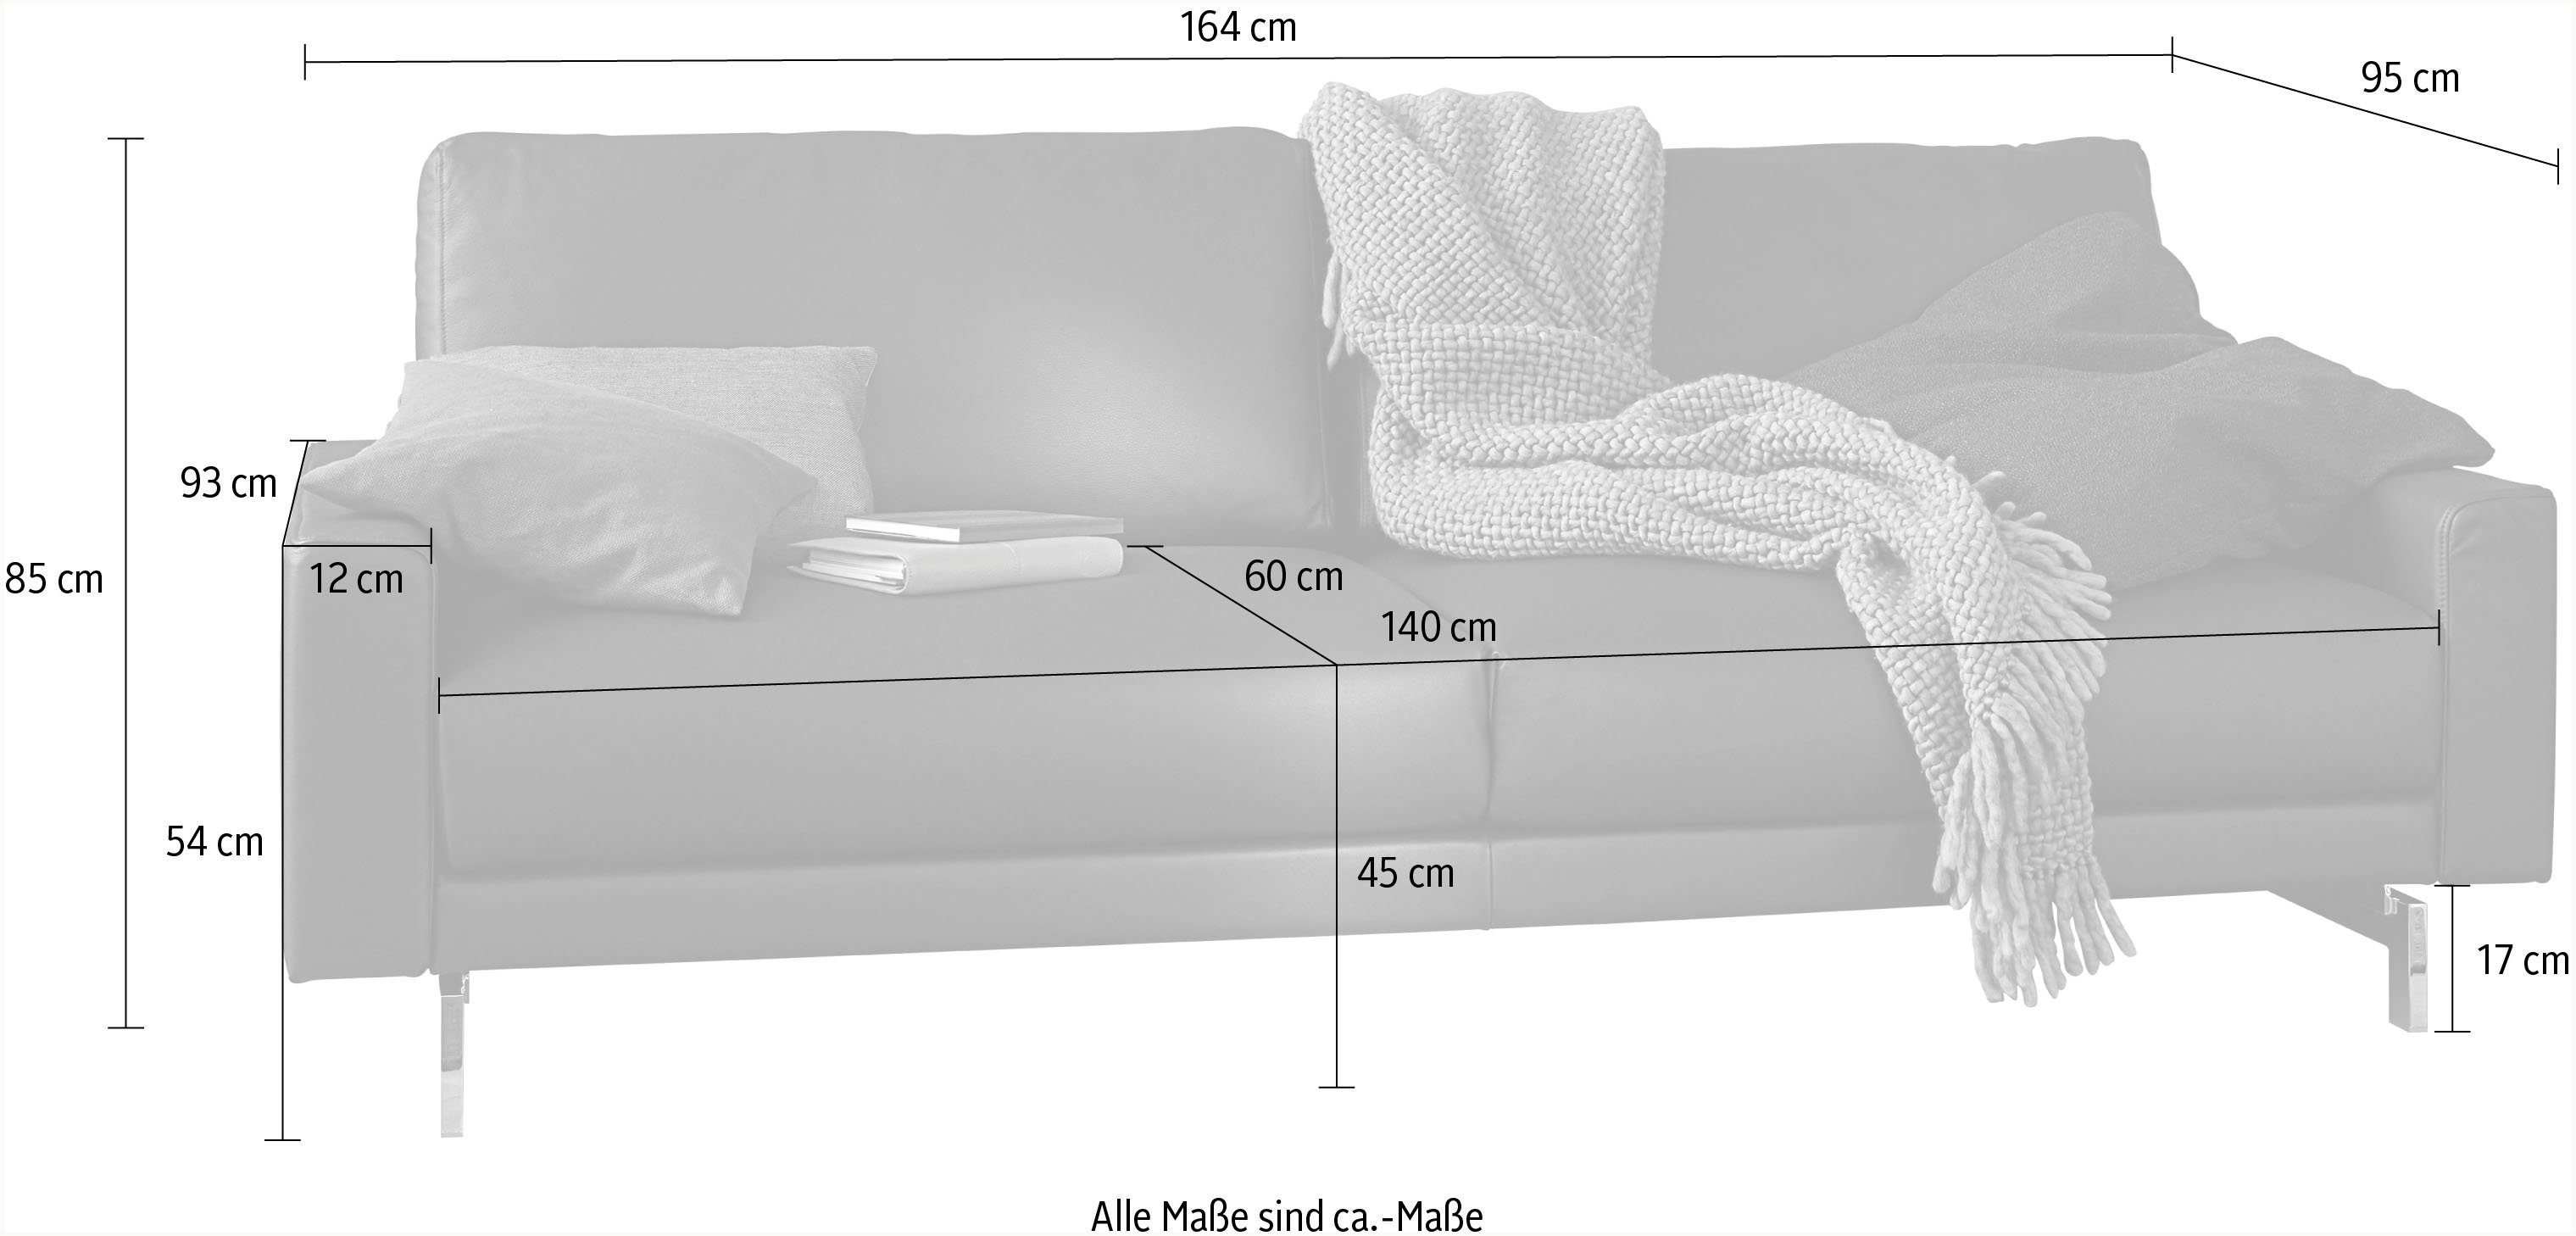 Fuß sofa 164 Armlehne hülsta cm glänzend, 2-Sitzer chromfarben niedrig, Breite hs.450,